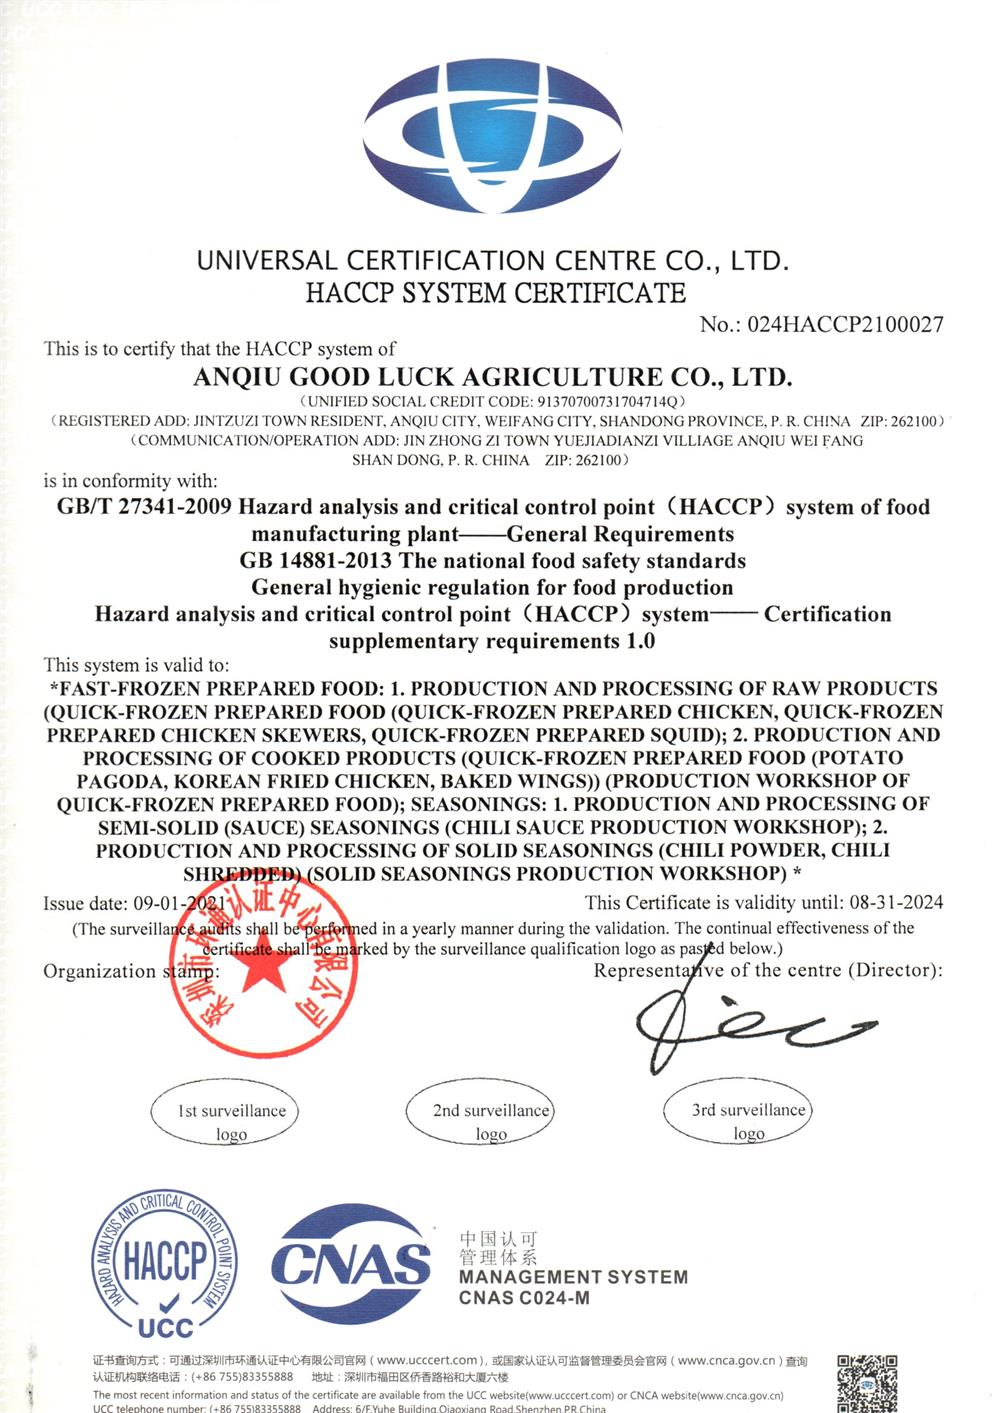 HACCP system certificate